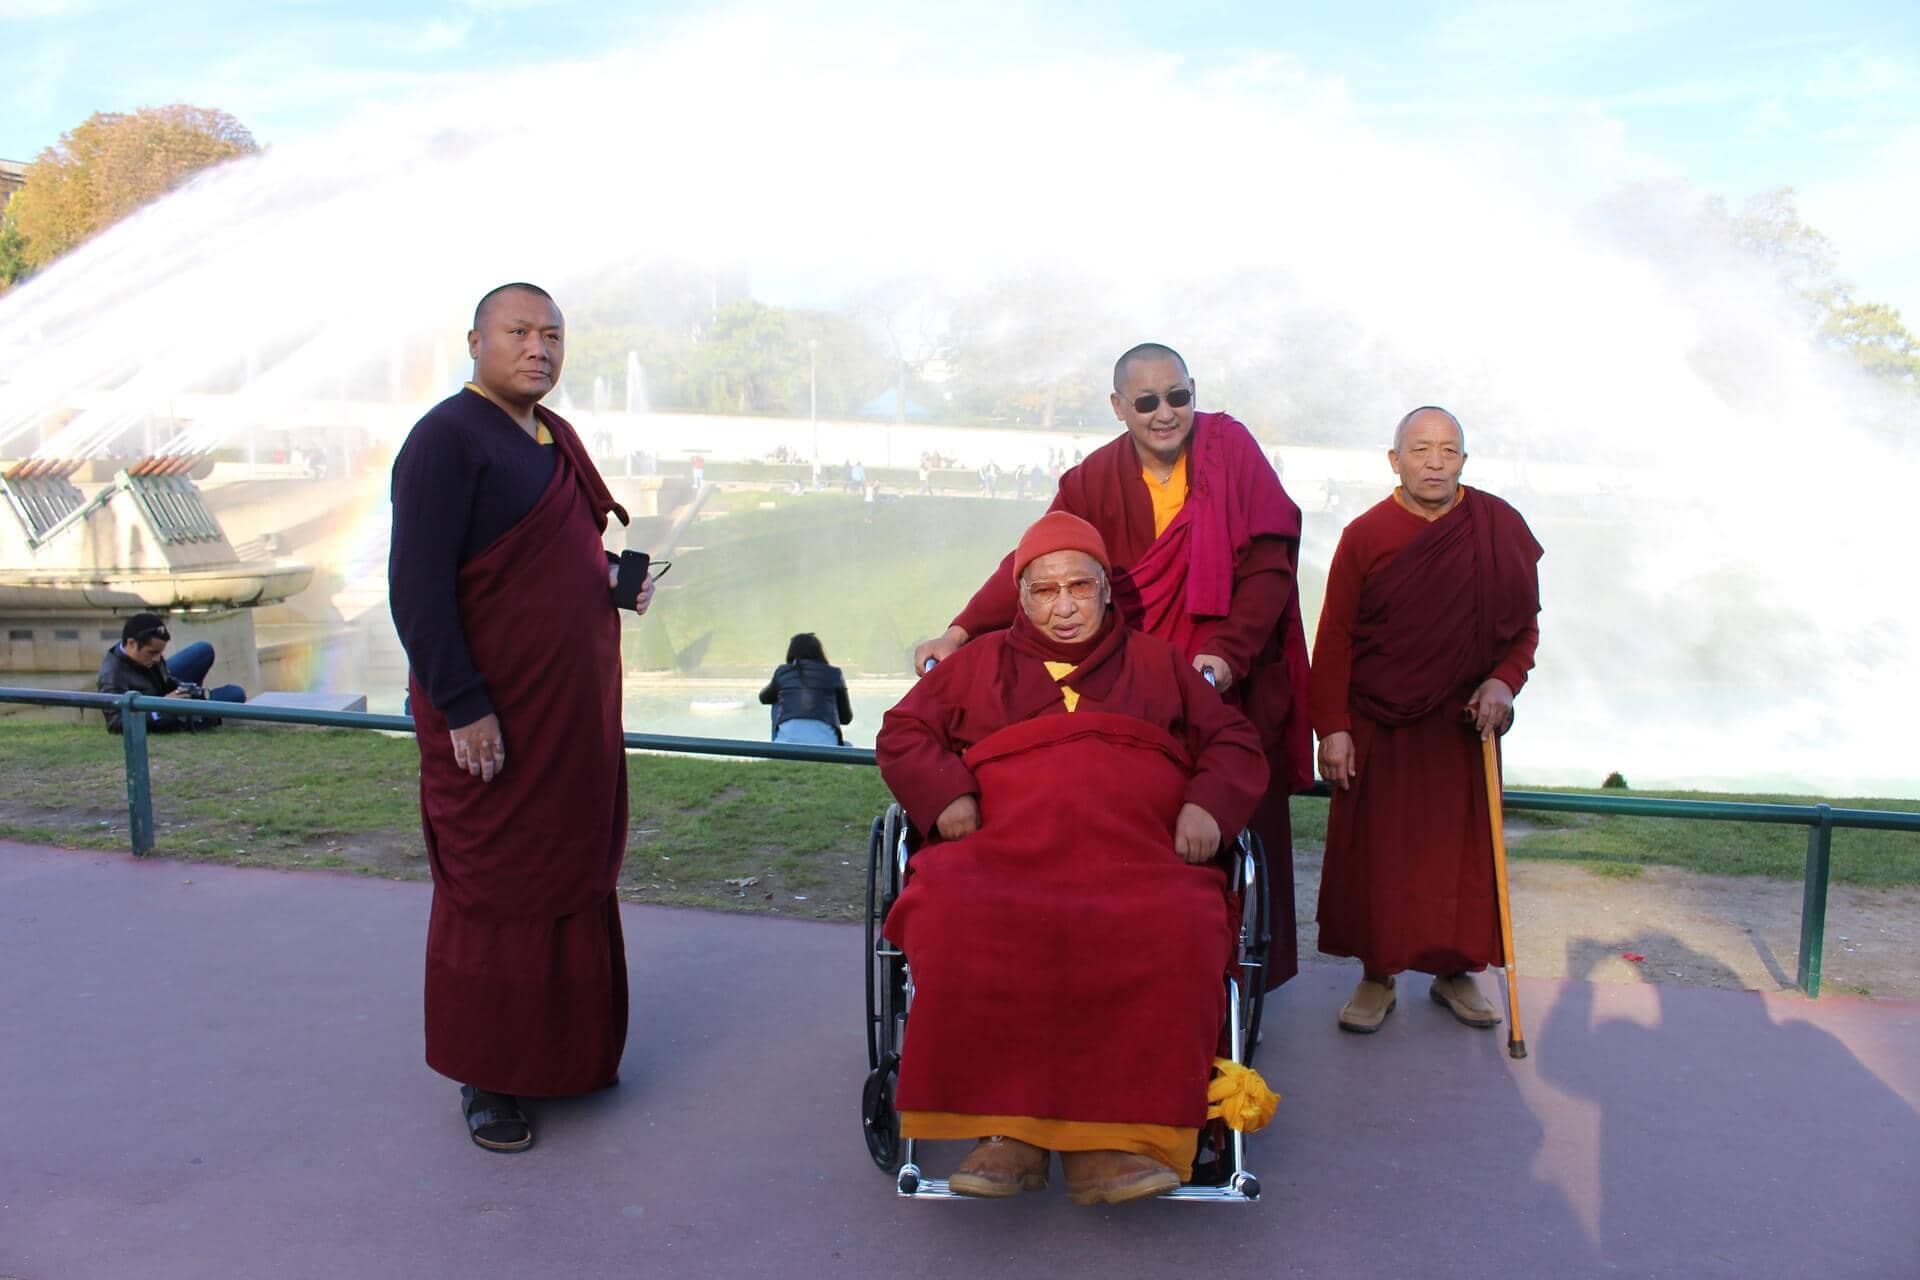 Taklung Tsetrul Rinpoche Tulku Drakpa Dzogchen Ranyak Patrul Rinpoche